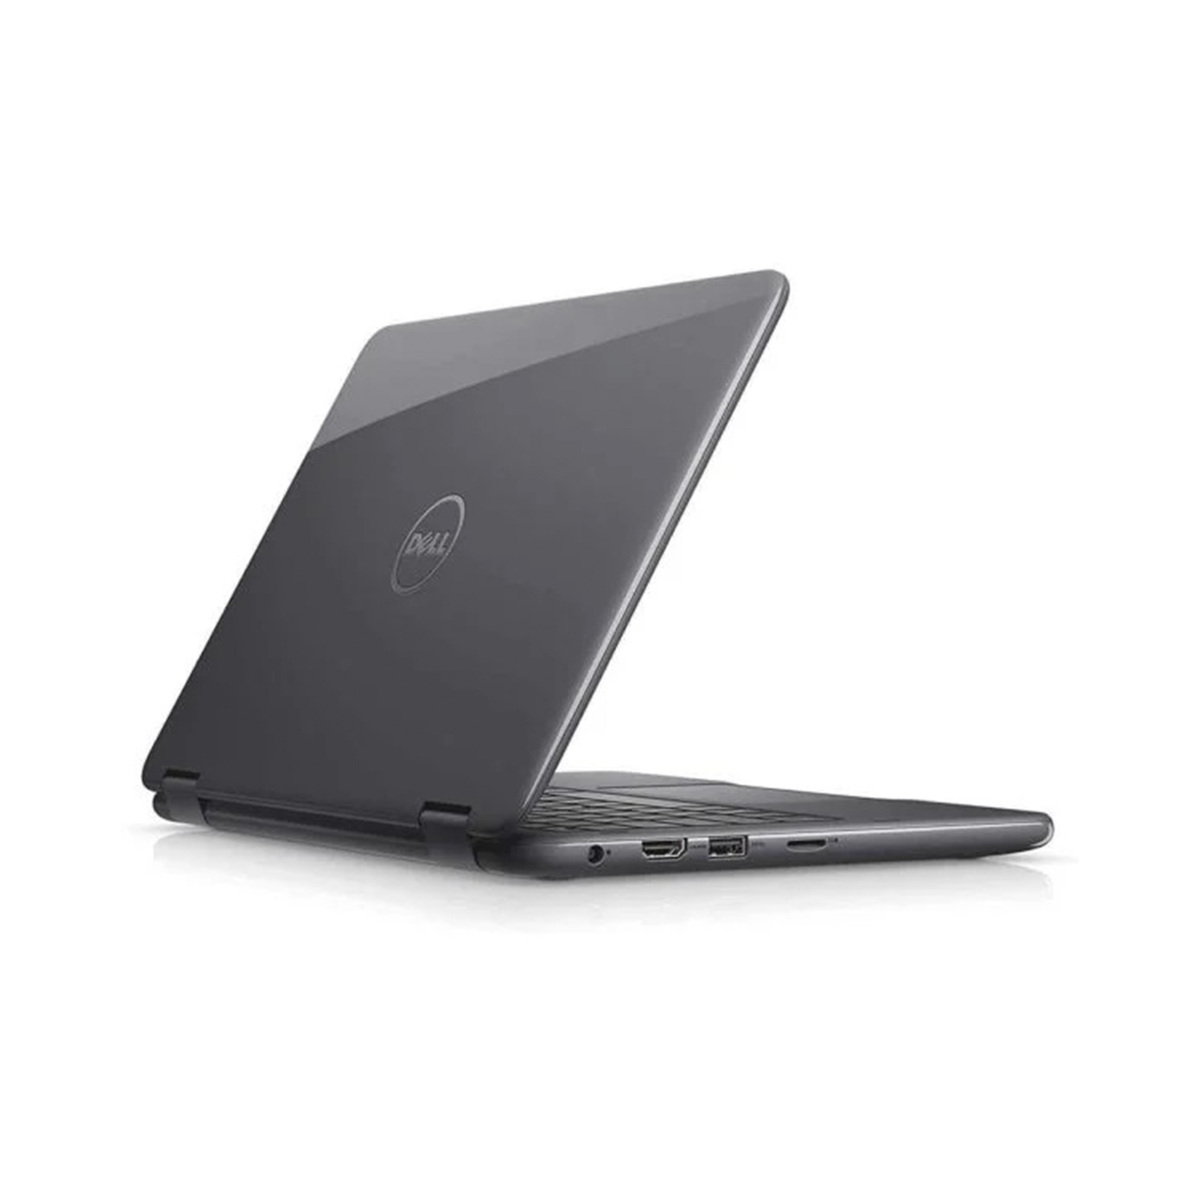 Dell Lattitude (3190-LAT-E0112-BLK) Laptop ,Celerion N4120 2.60GHz, 4GBRAM, 64GB eMMC Storage,Windows 10,11.6inchDisplay, Black